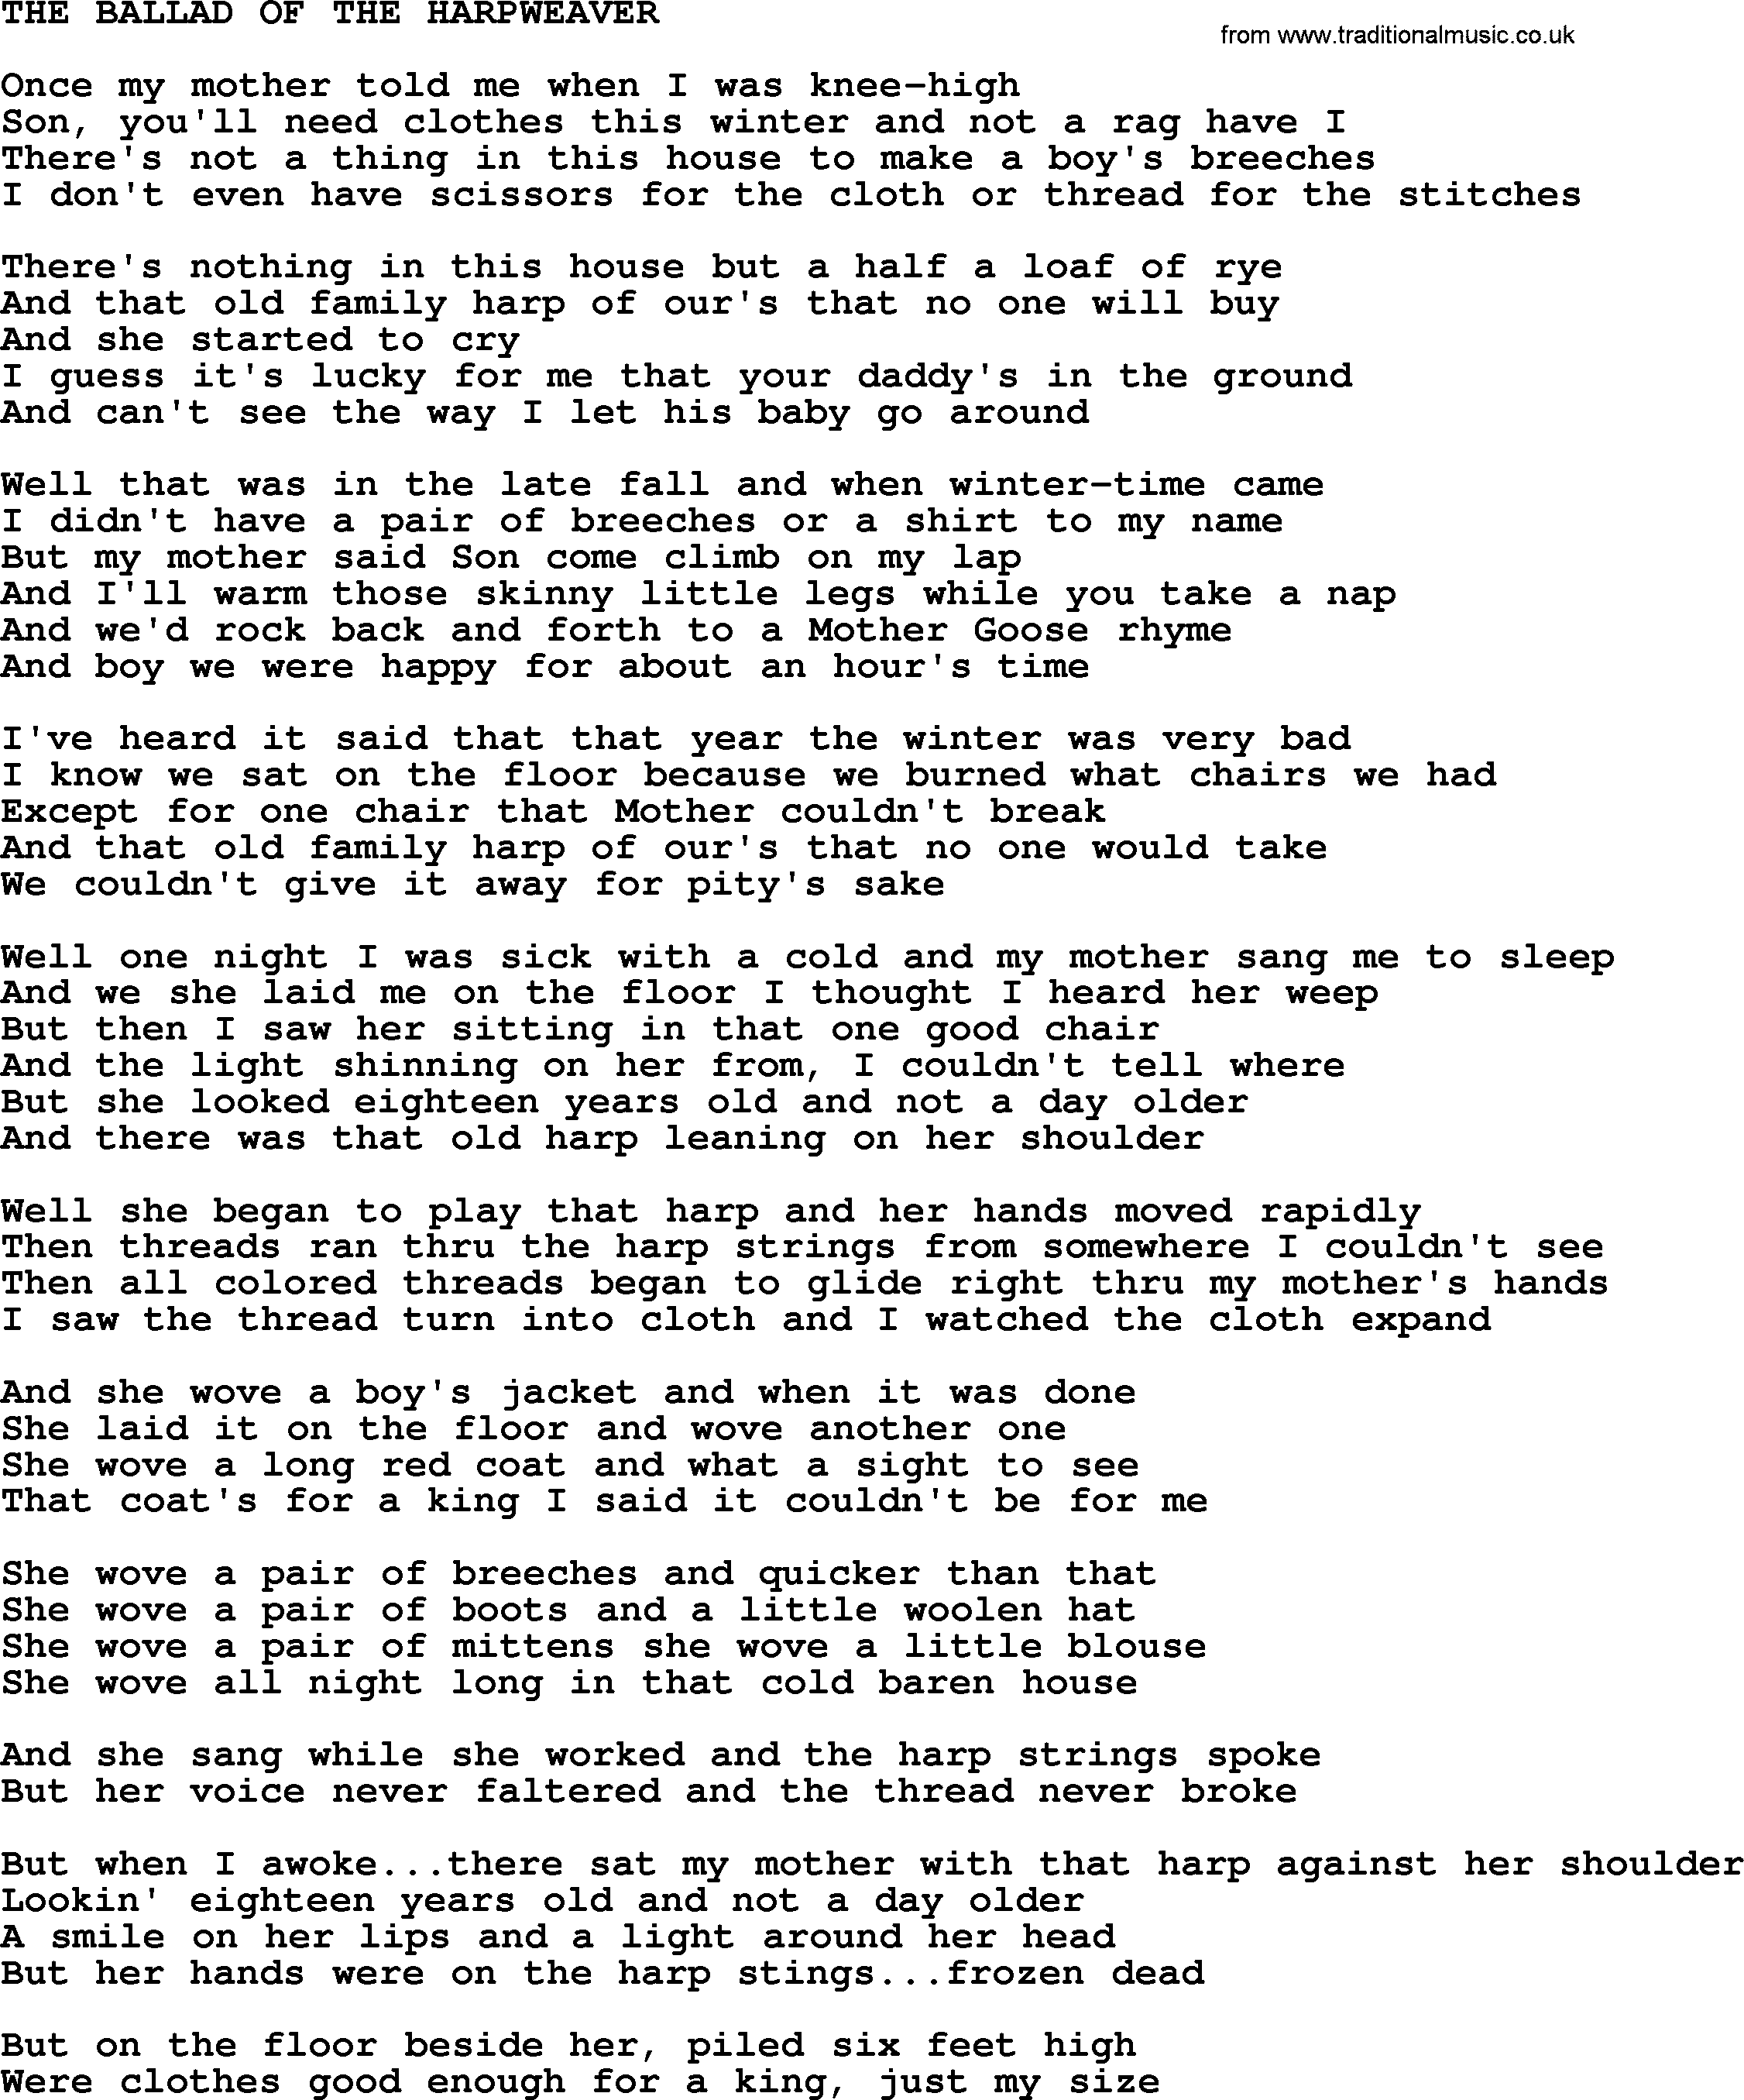 Johnny Cash song The Ballad Of The Harpweaver.txt lyrics